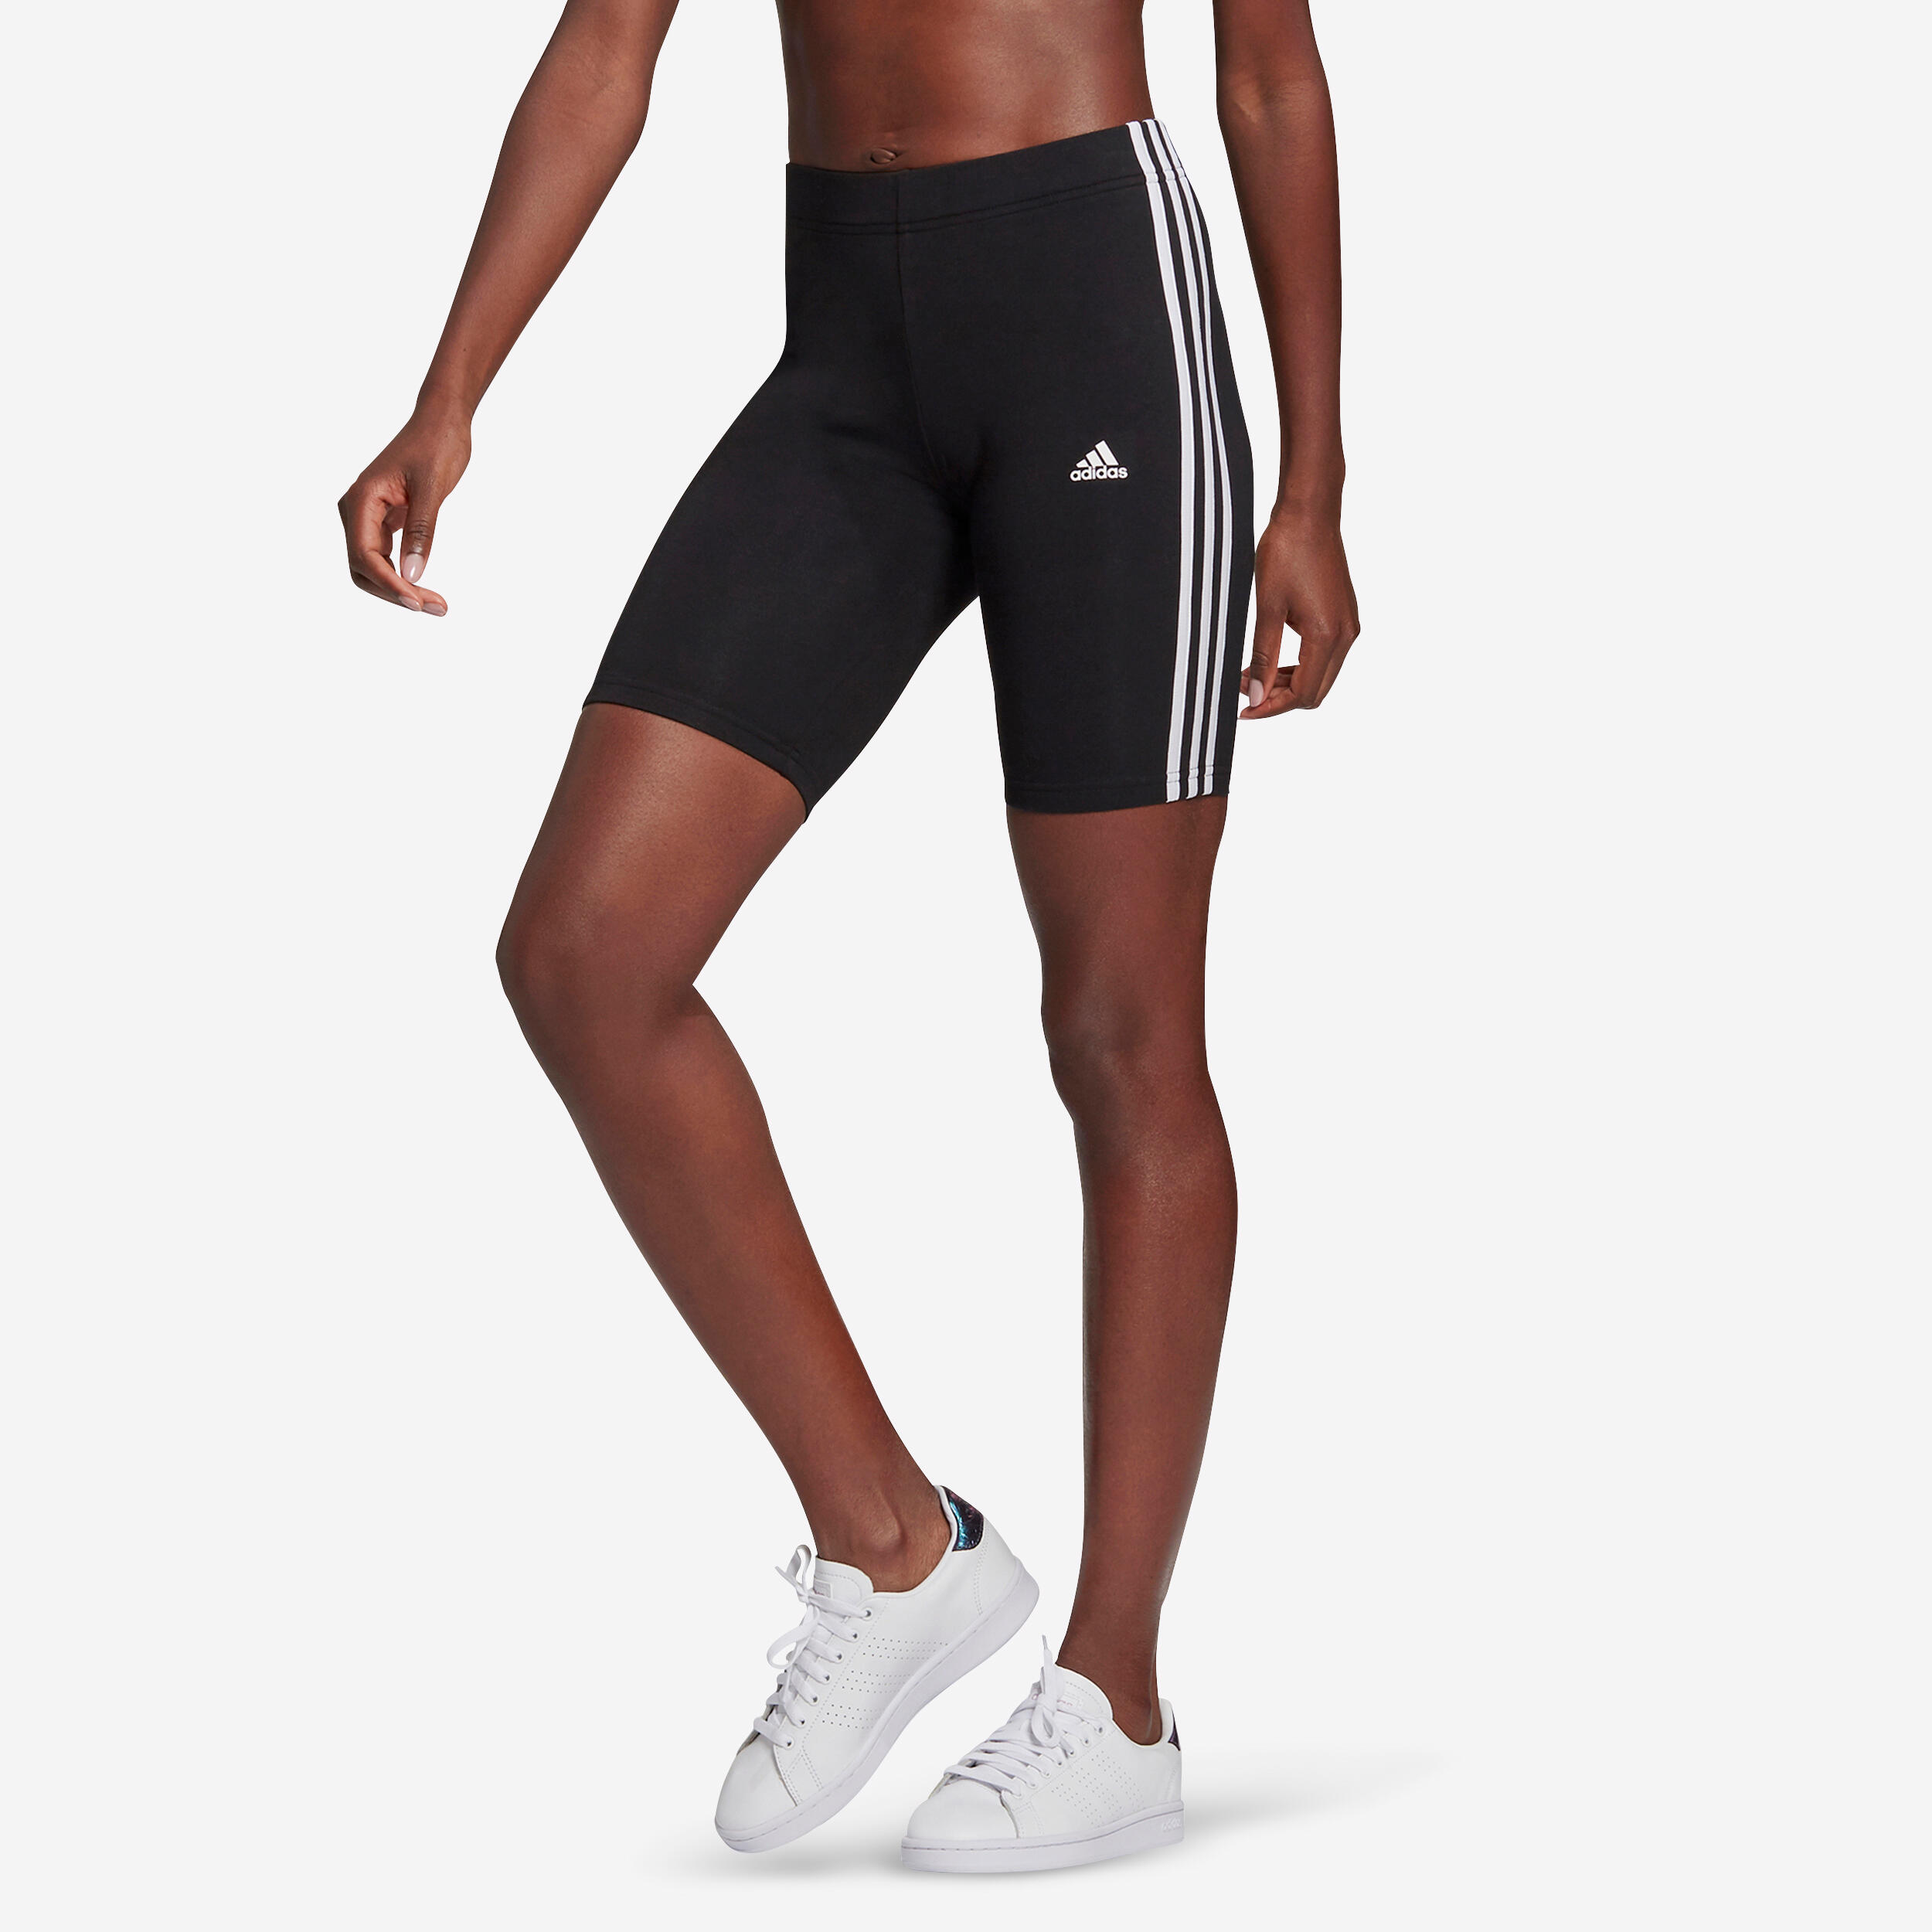 Decathlon | Pantaloncini donna fitness ADIDAS cotone leggero neri |  Adidas